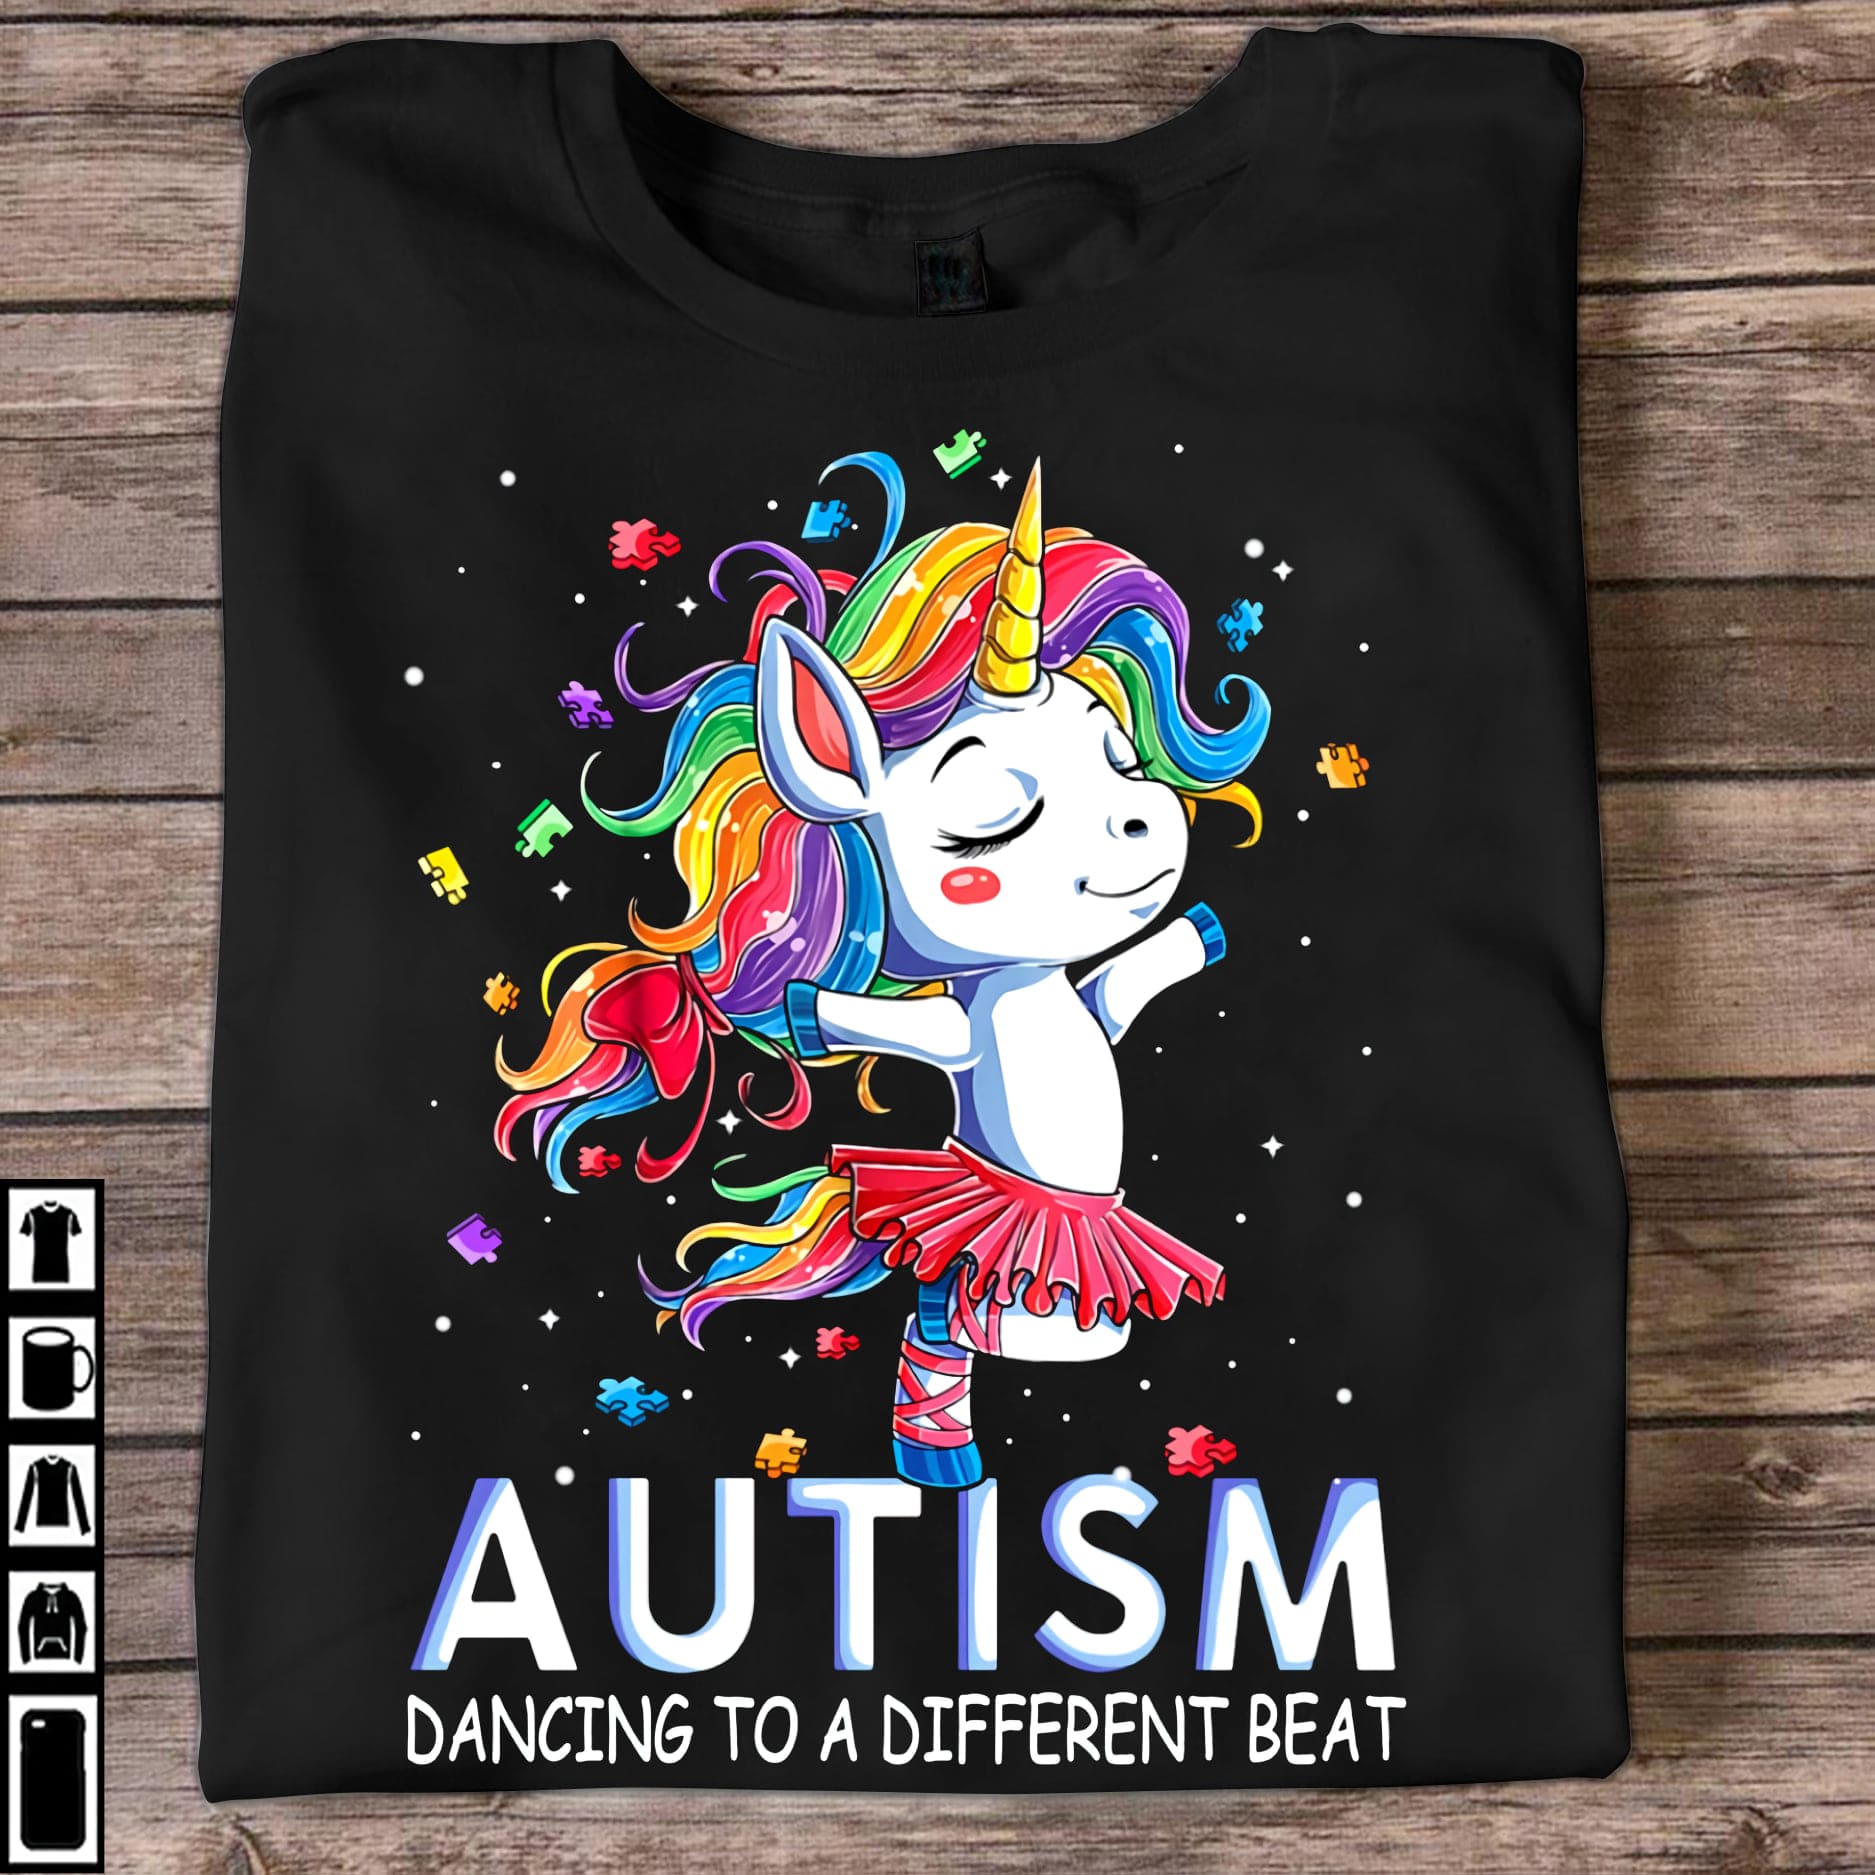 Autism awareness - Dancing to different beat, Unicorn dancing